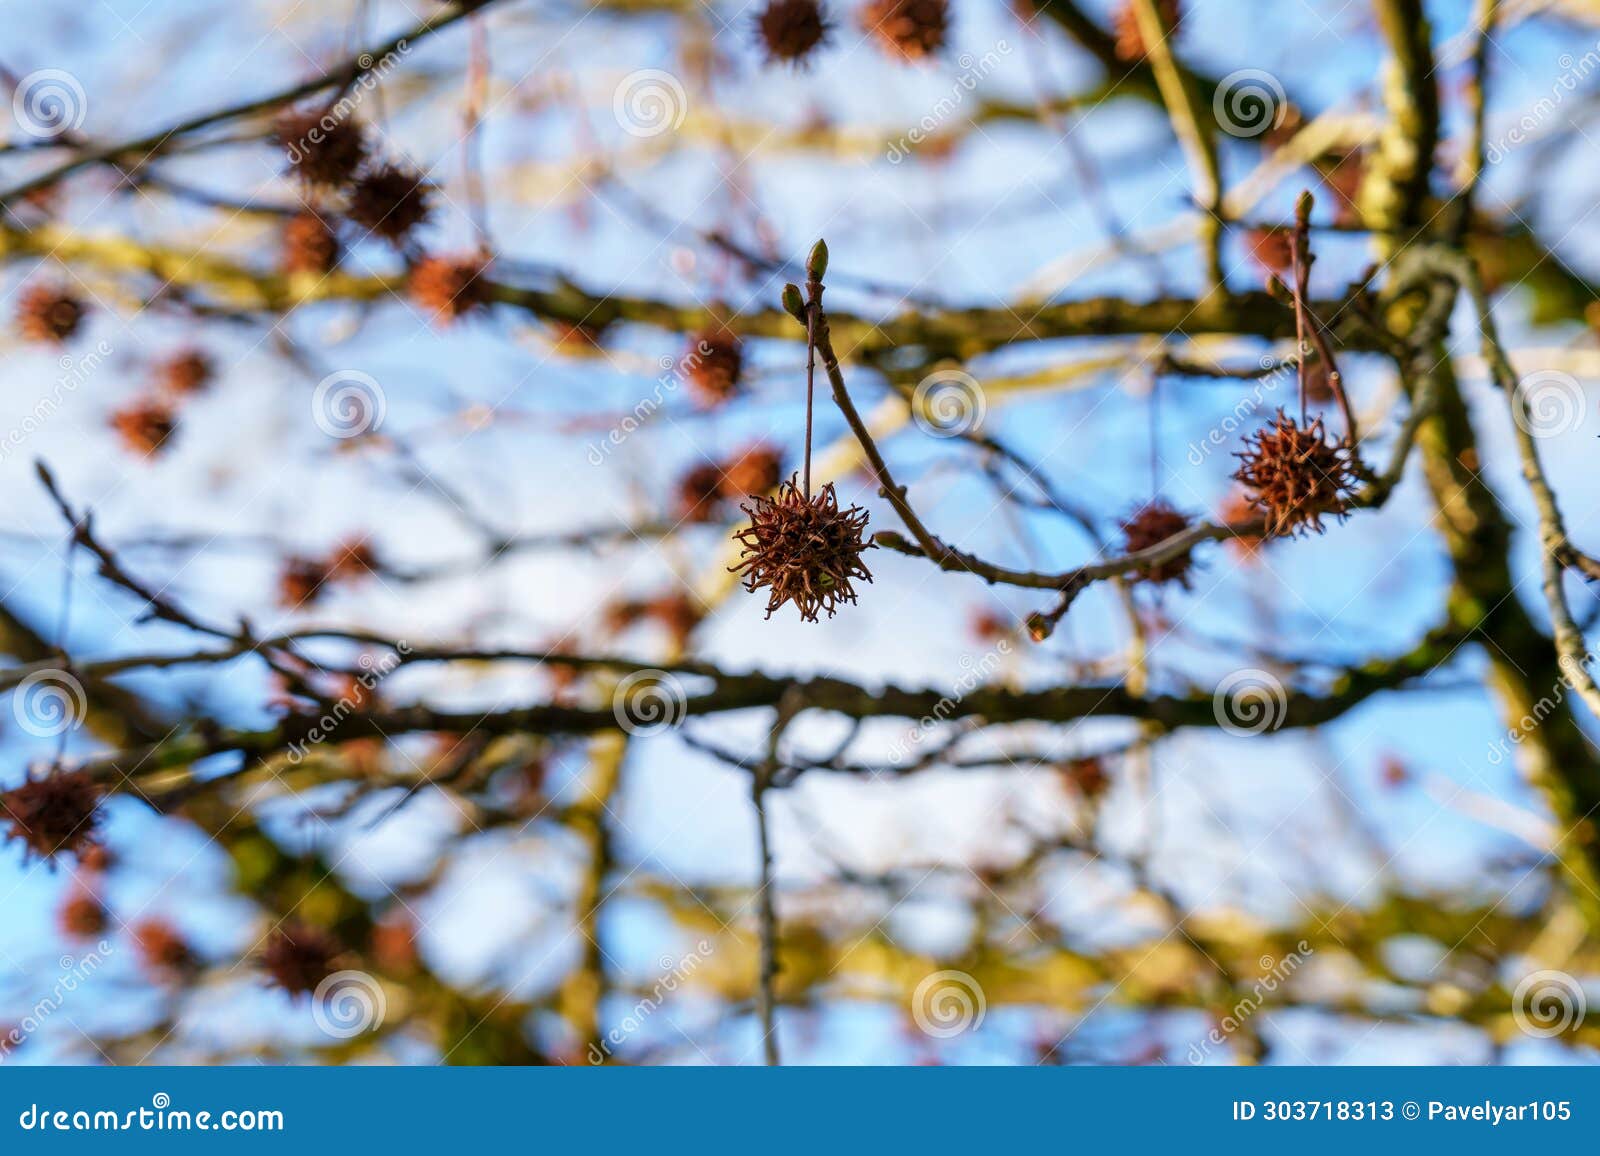 liquidambar styraciflua (american storax) tree branch with hanging spiky seeds in wintertime